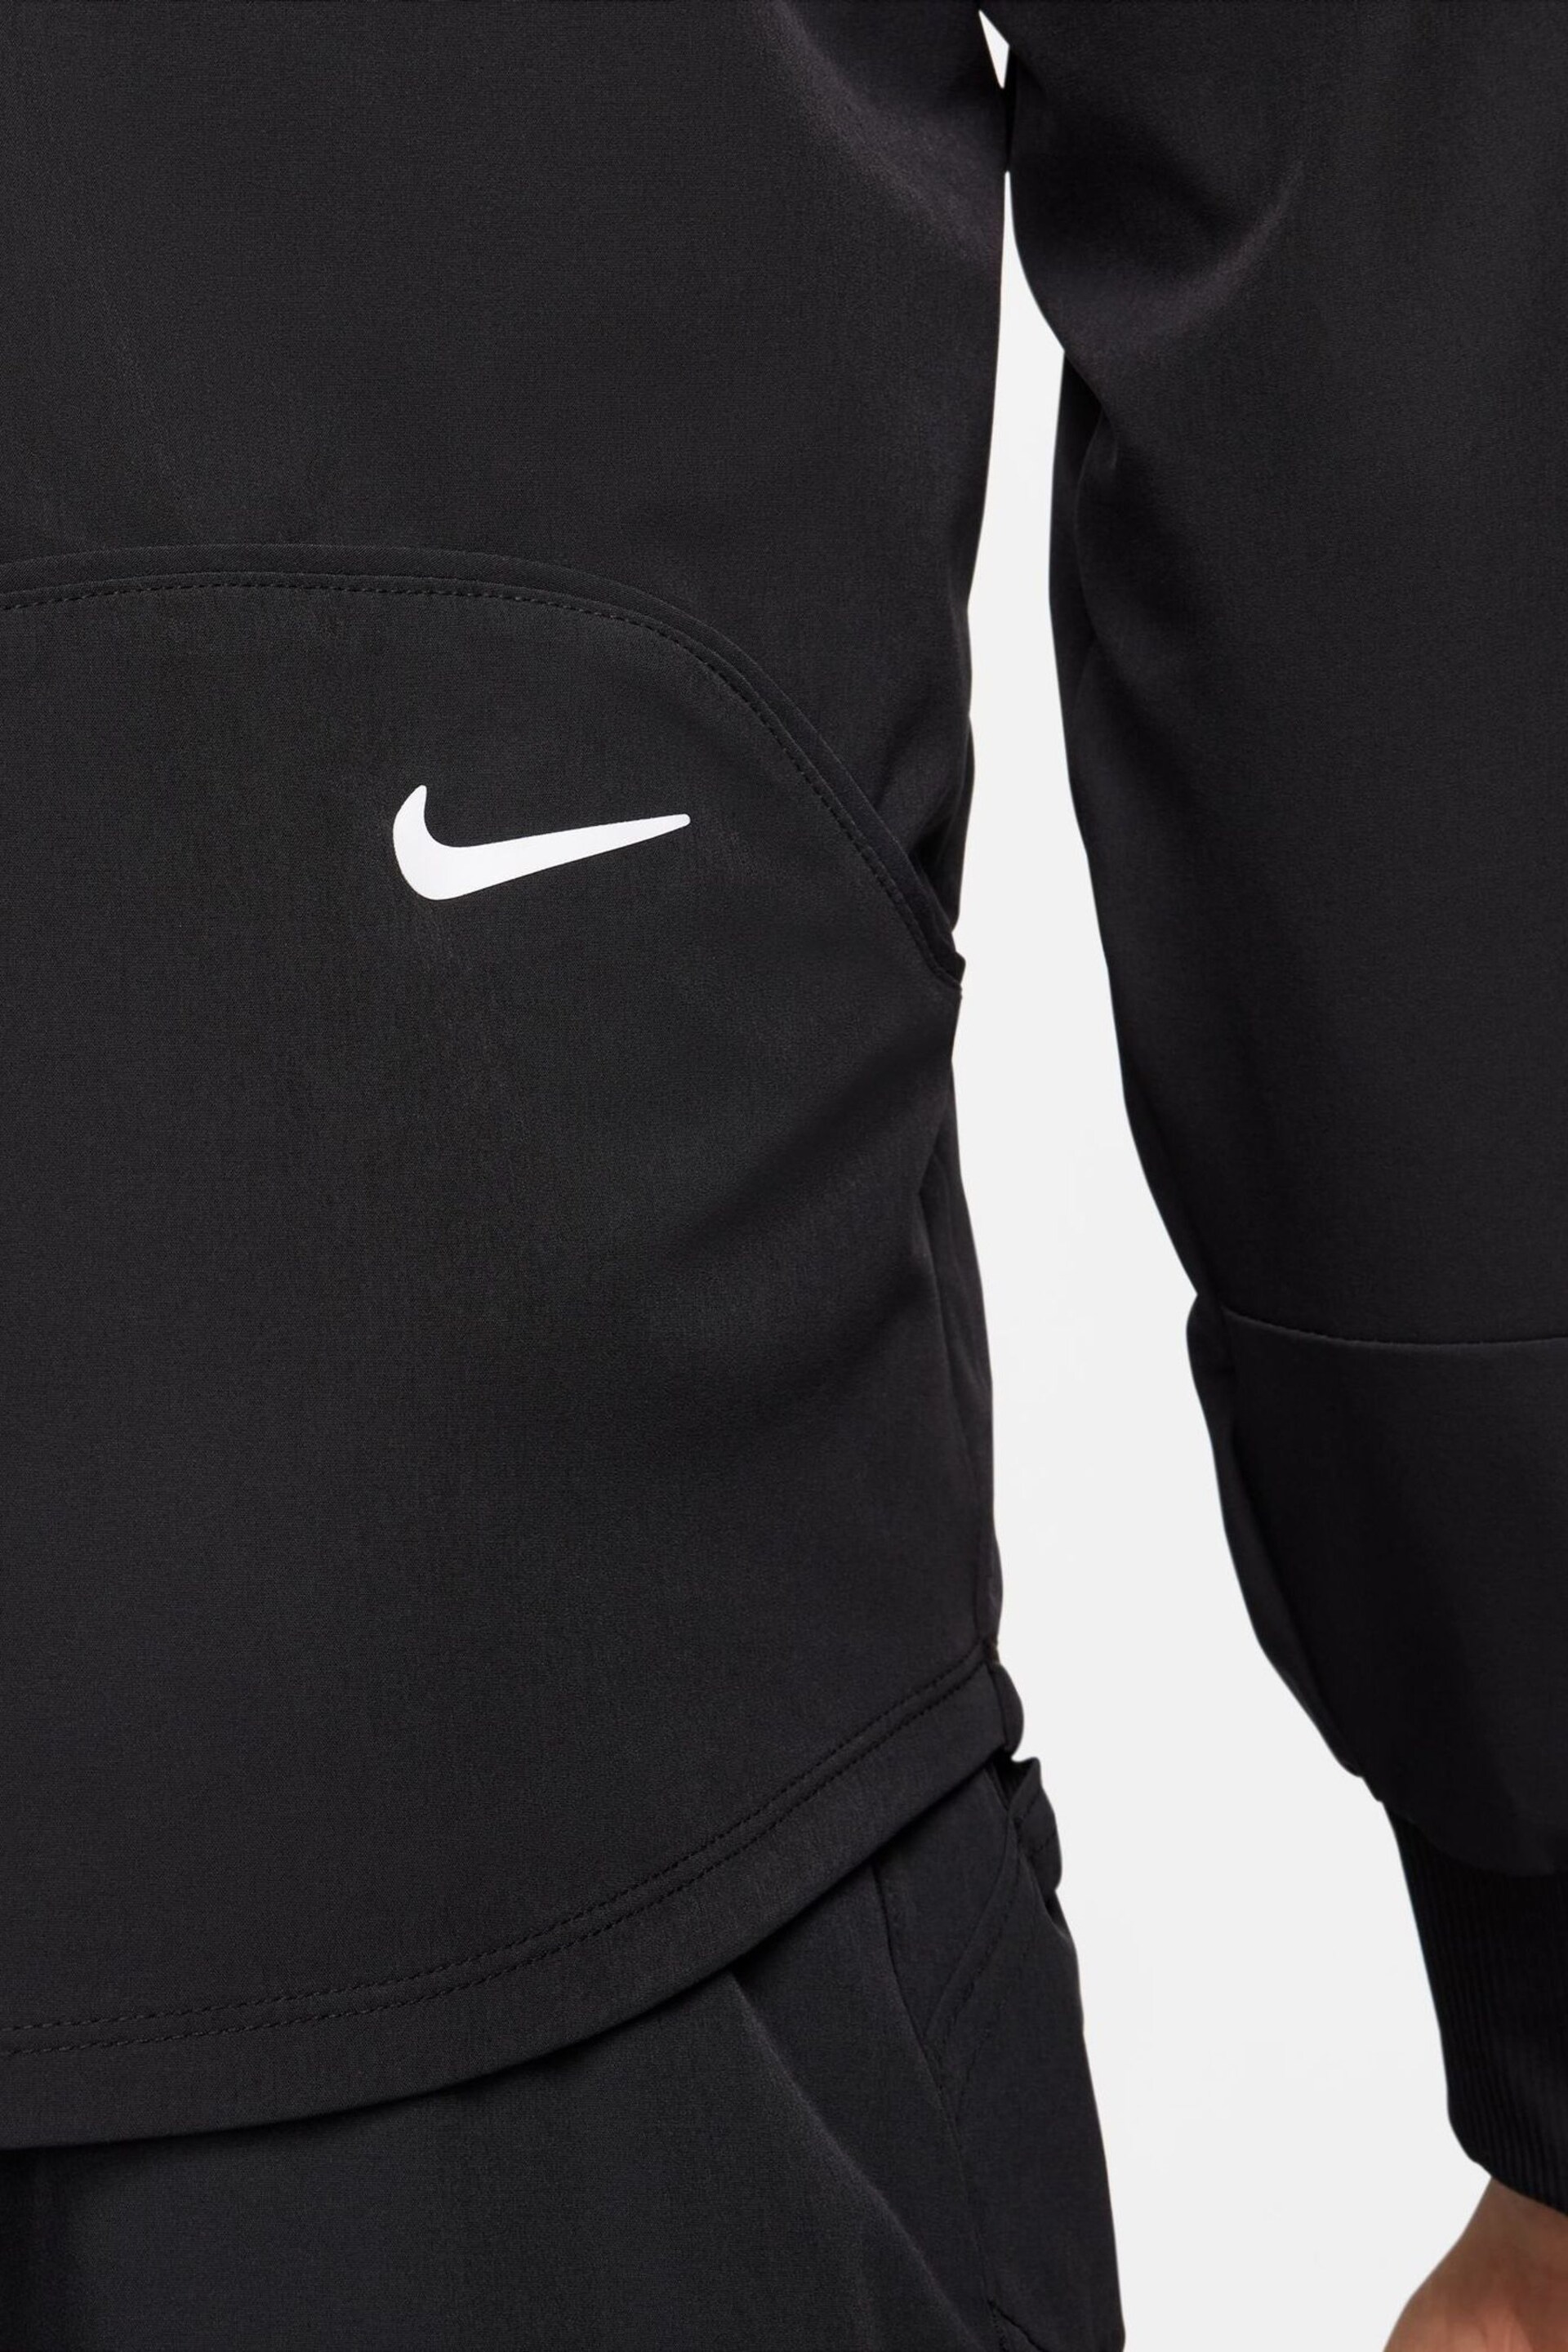 Nike Black Court Advantage Dri-FIT Tennis Jacket - Image 5 of 6